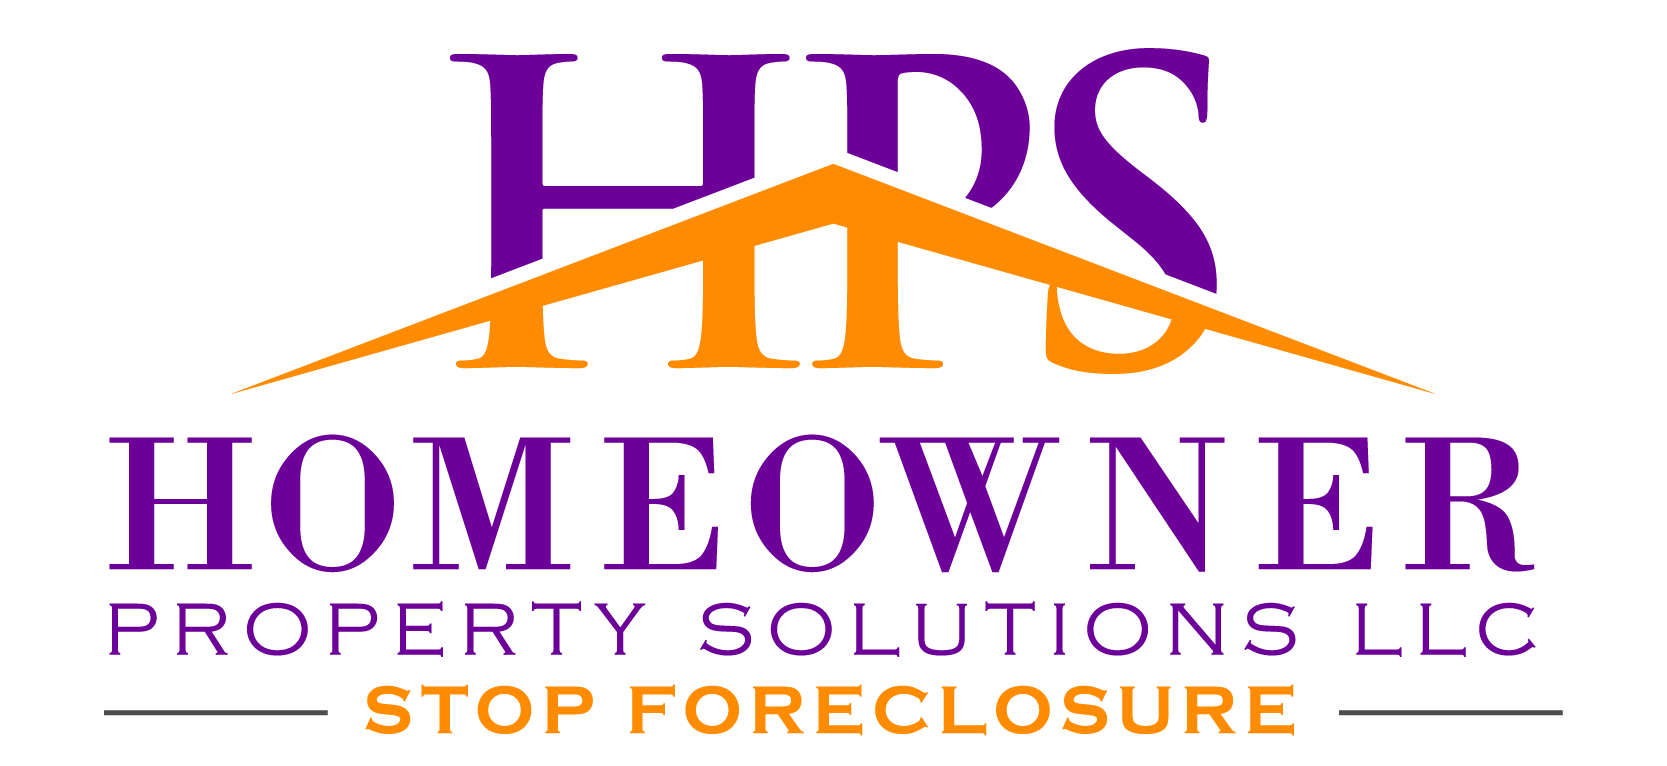 Homeowner Property Solution LLC